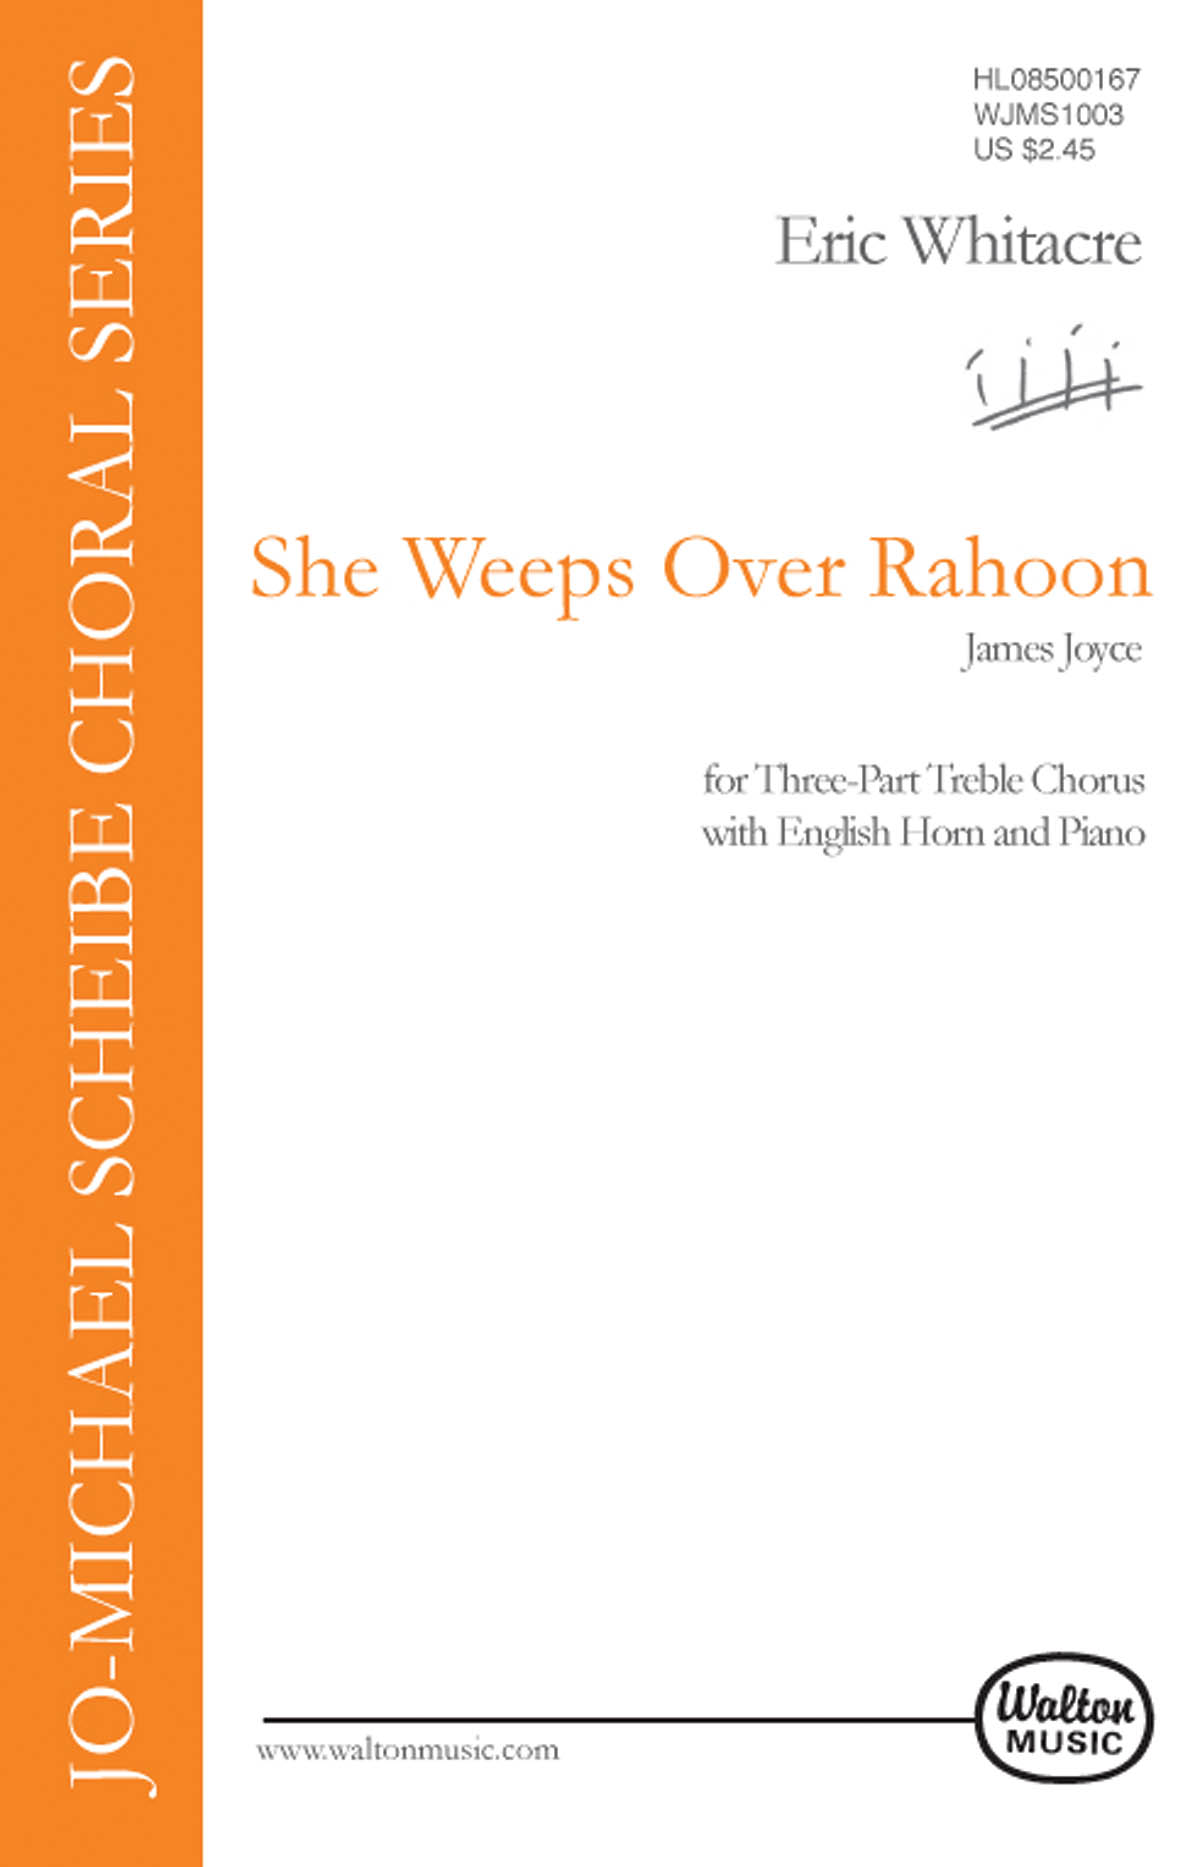 Eric Whitacre: She weeps over Rahoon (SSA)